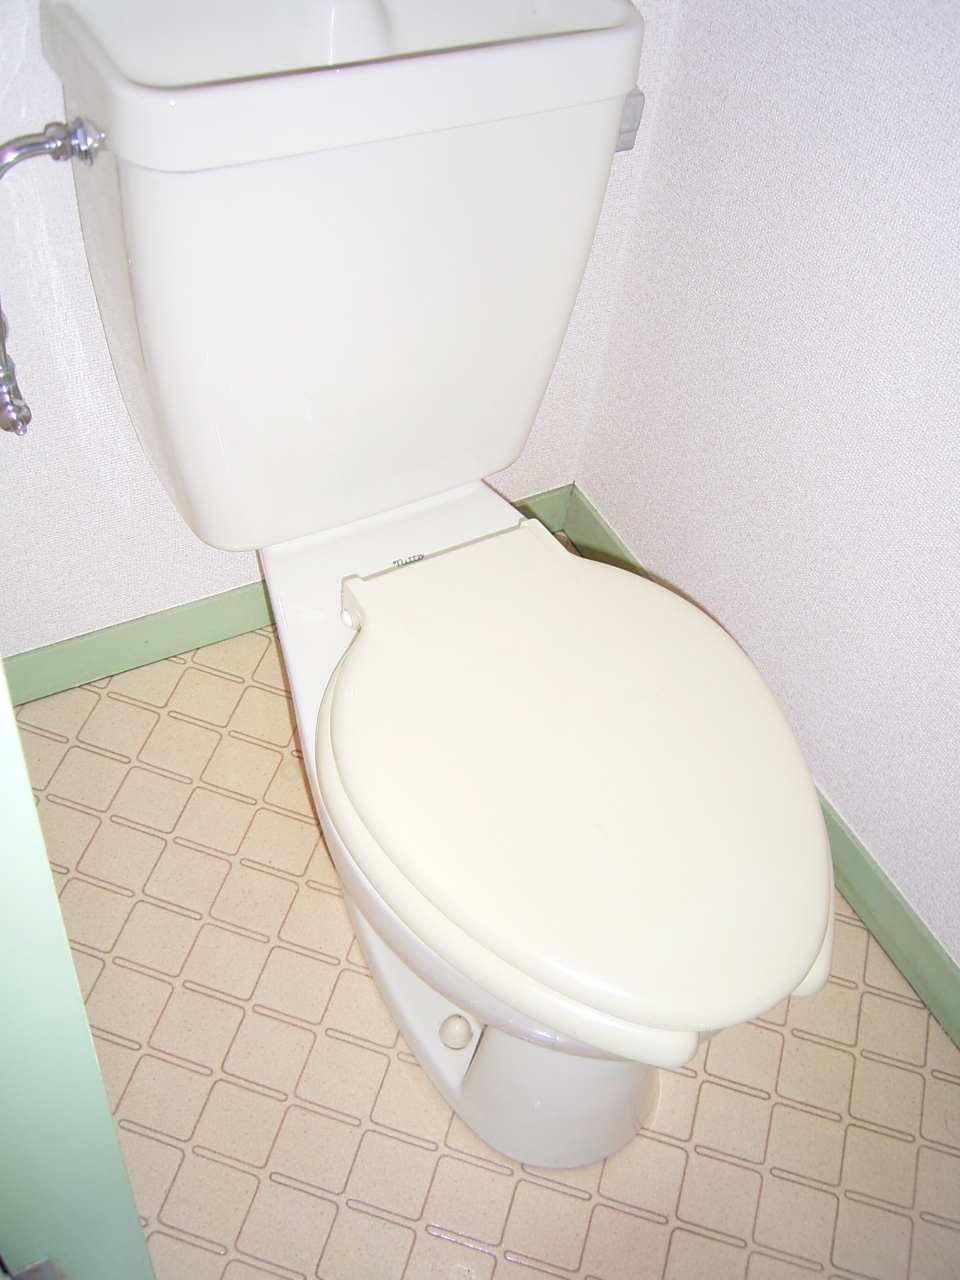 Toilet. It is clean toilets of a sense of white